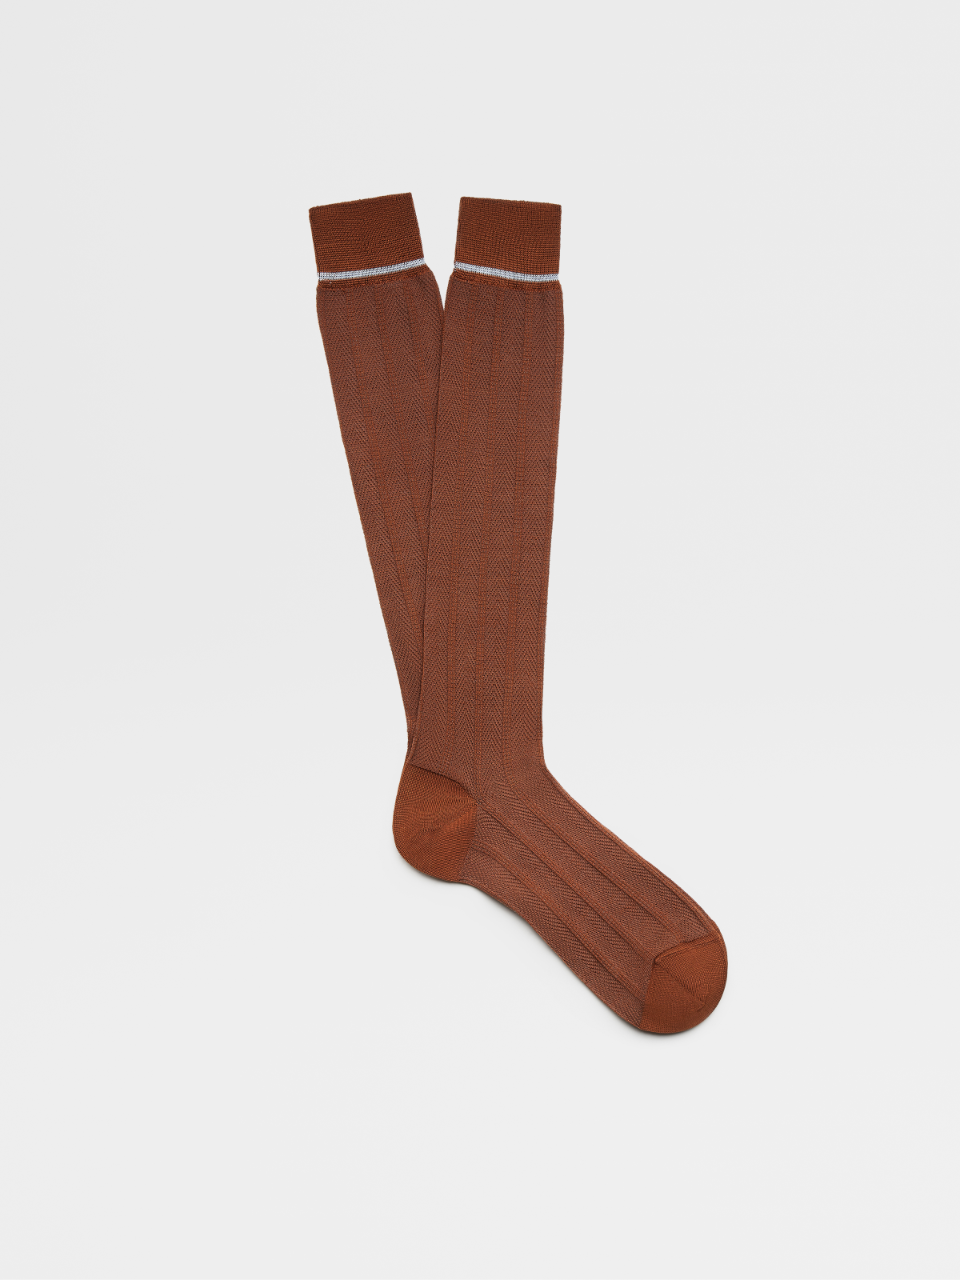 Vicuna Color Chevron Cotton Blend Mid Calf Socks